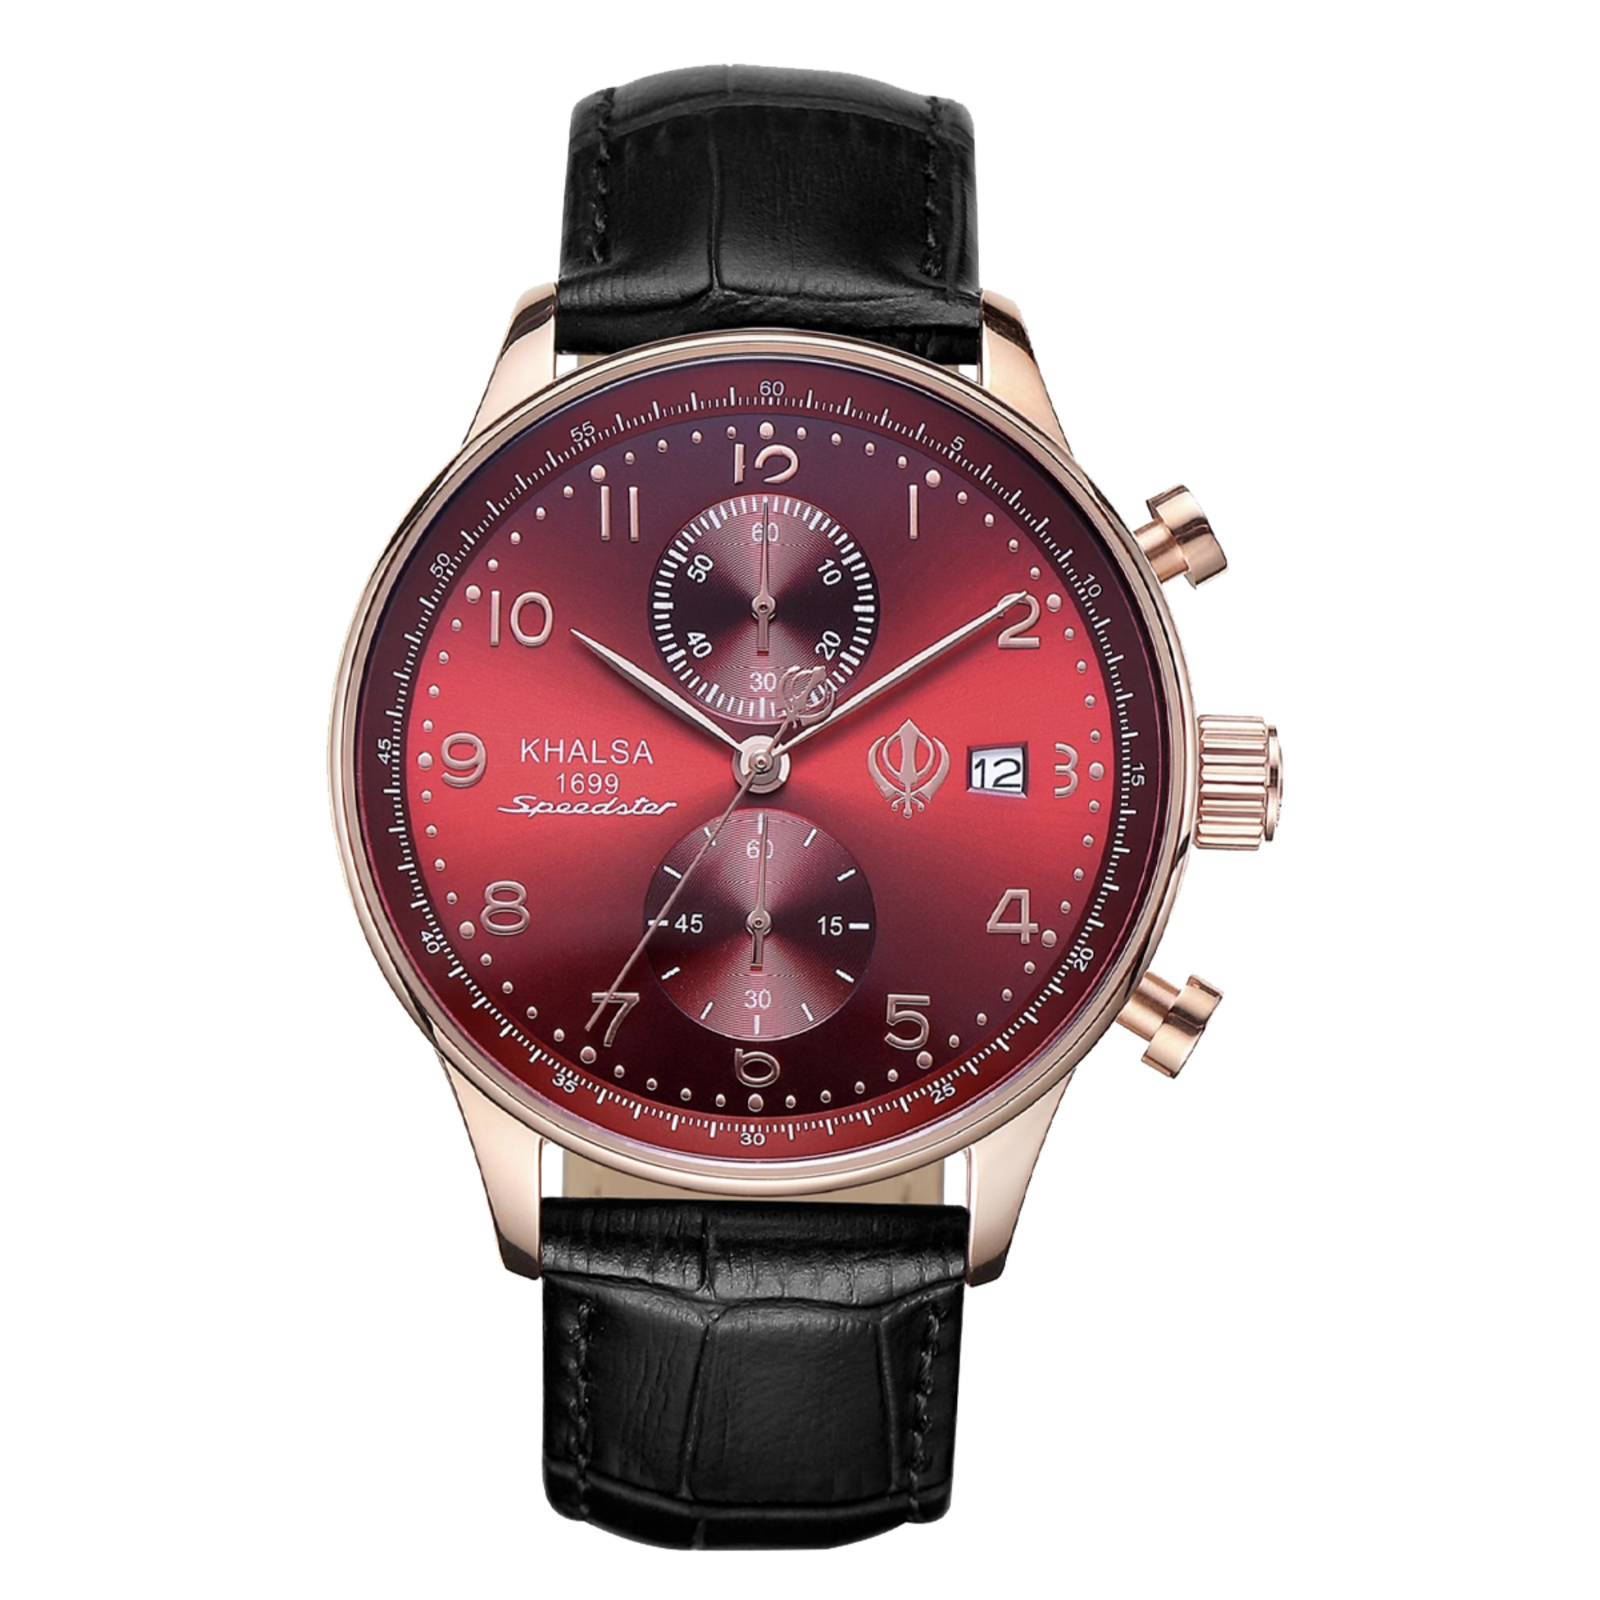 House of Khalsa Blood Red Speedster Khalsa Analog Chronograph Luxury Watch  With Khanda Symbol On The Dial - Precision Timekeeping